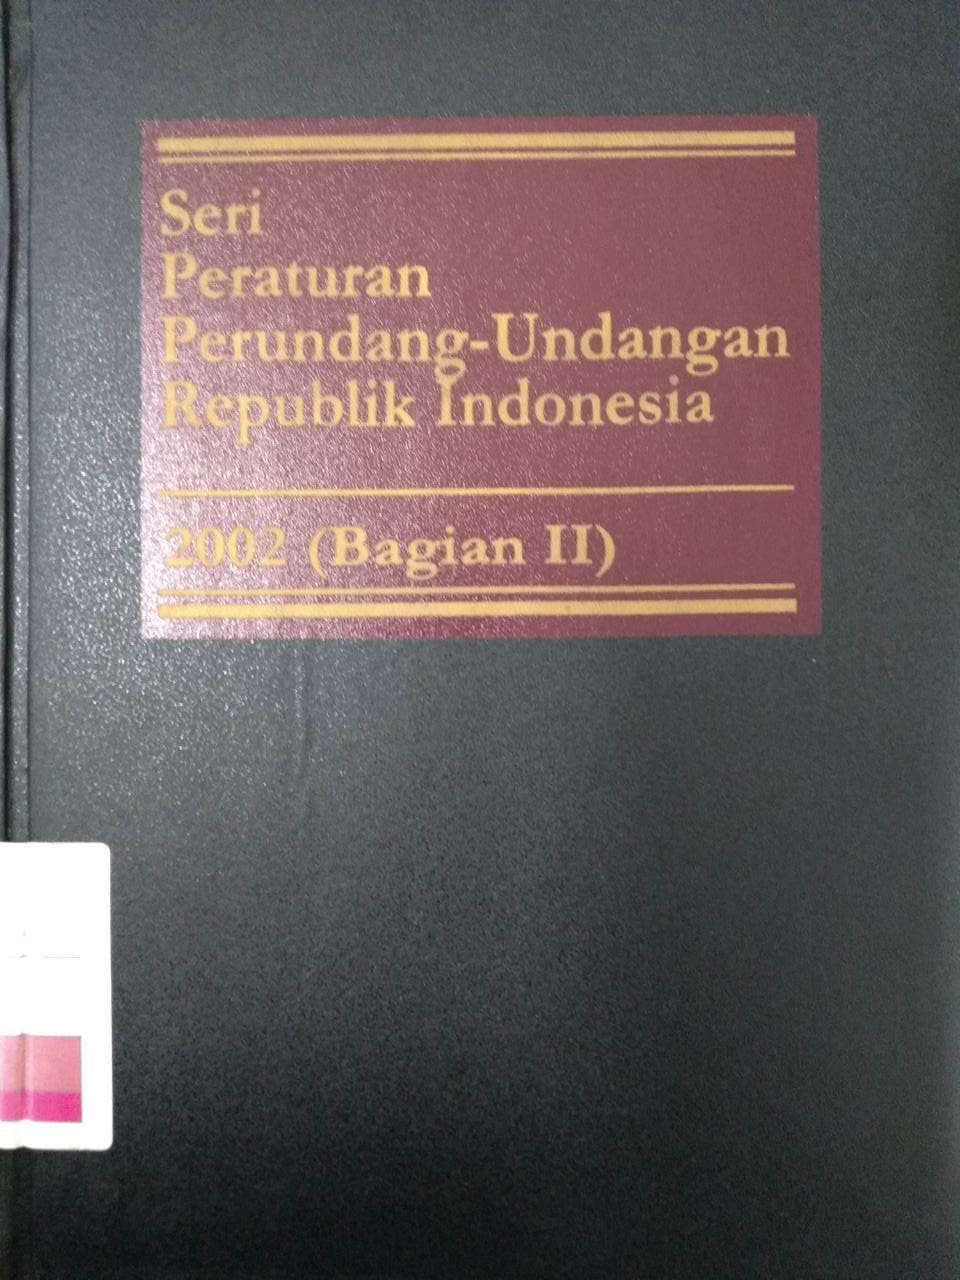 Seri Peraturan Perundang-undangan Republik Indonesia 2004 (Bagian IV). Jilid 3